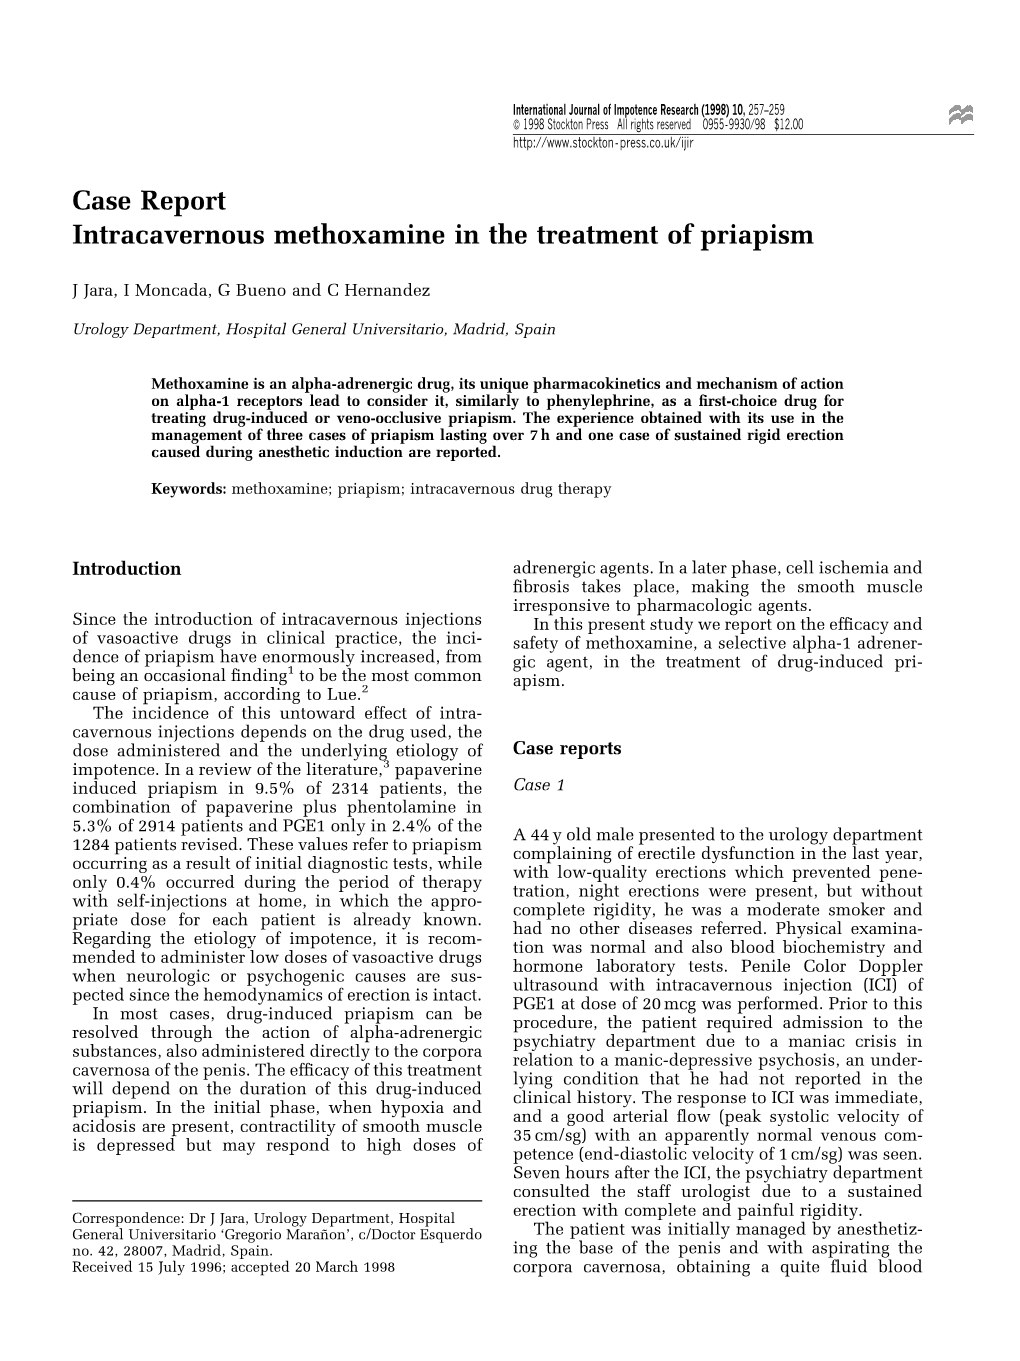 Intracavernous Methoxamine in the Treatment of Priapism